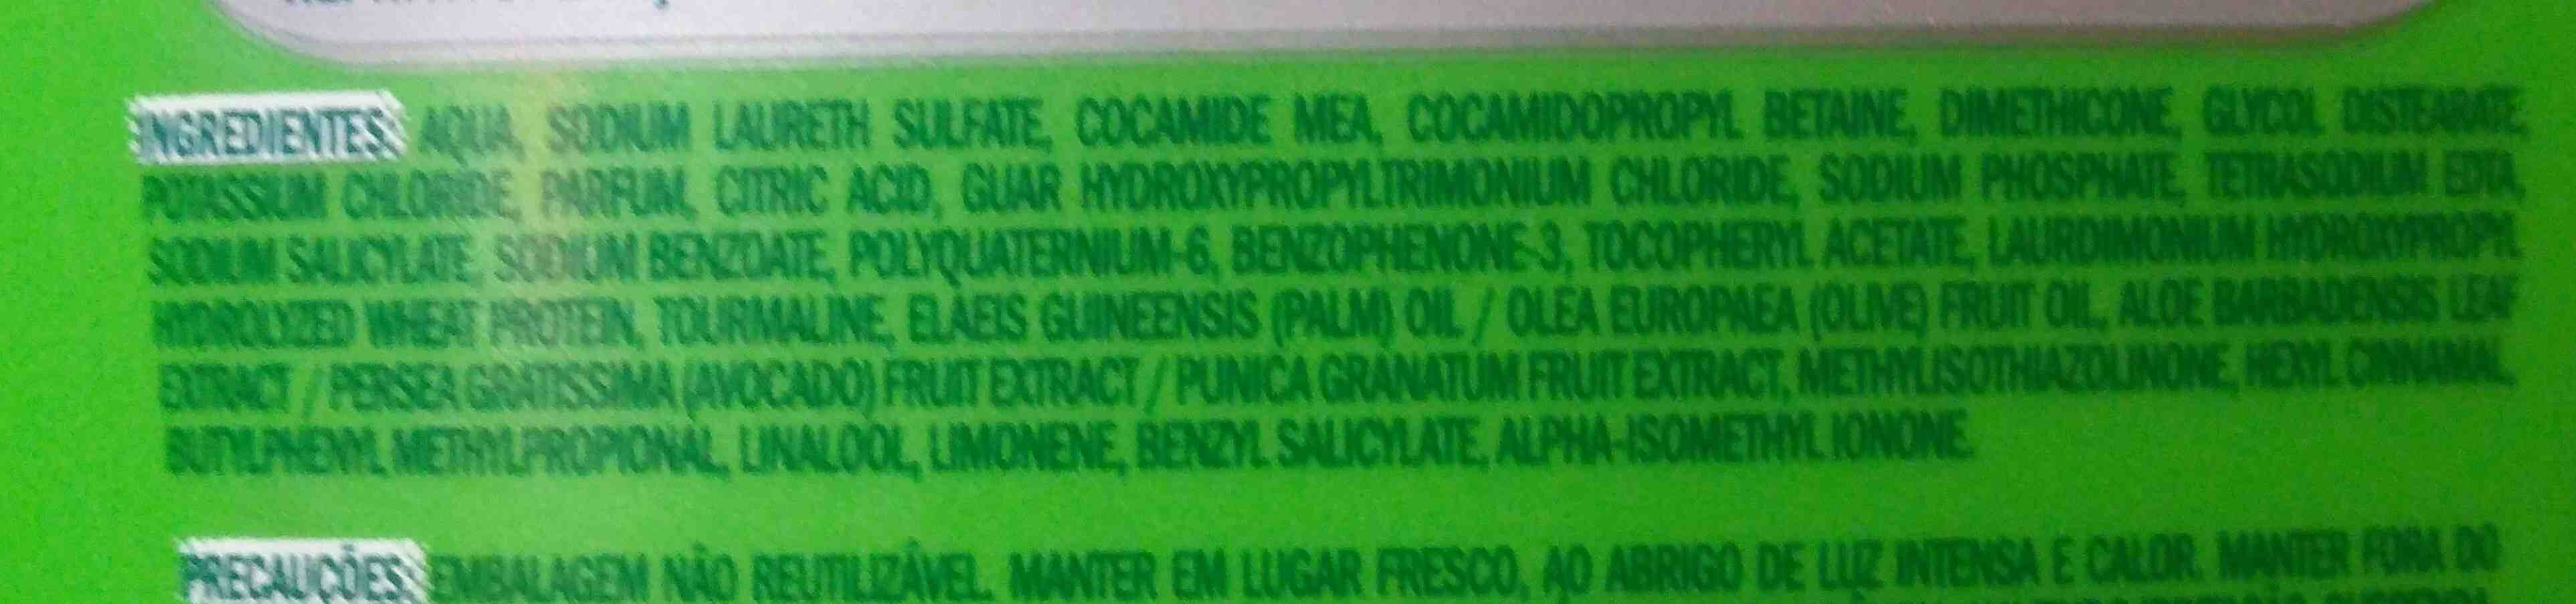 palmolive - Ingrédients - en